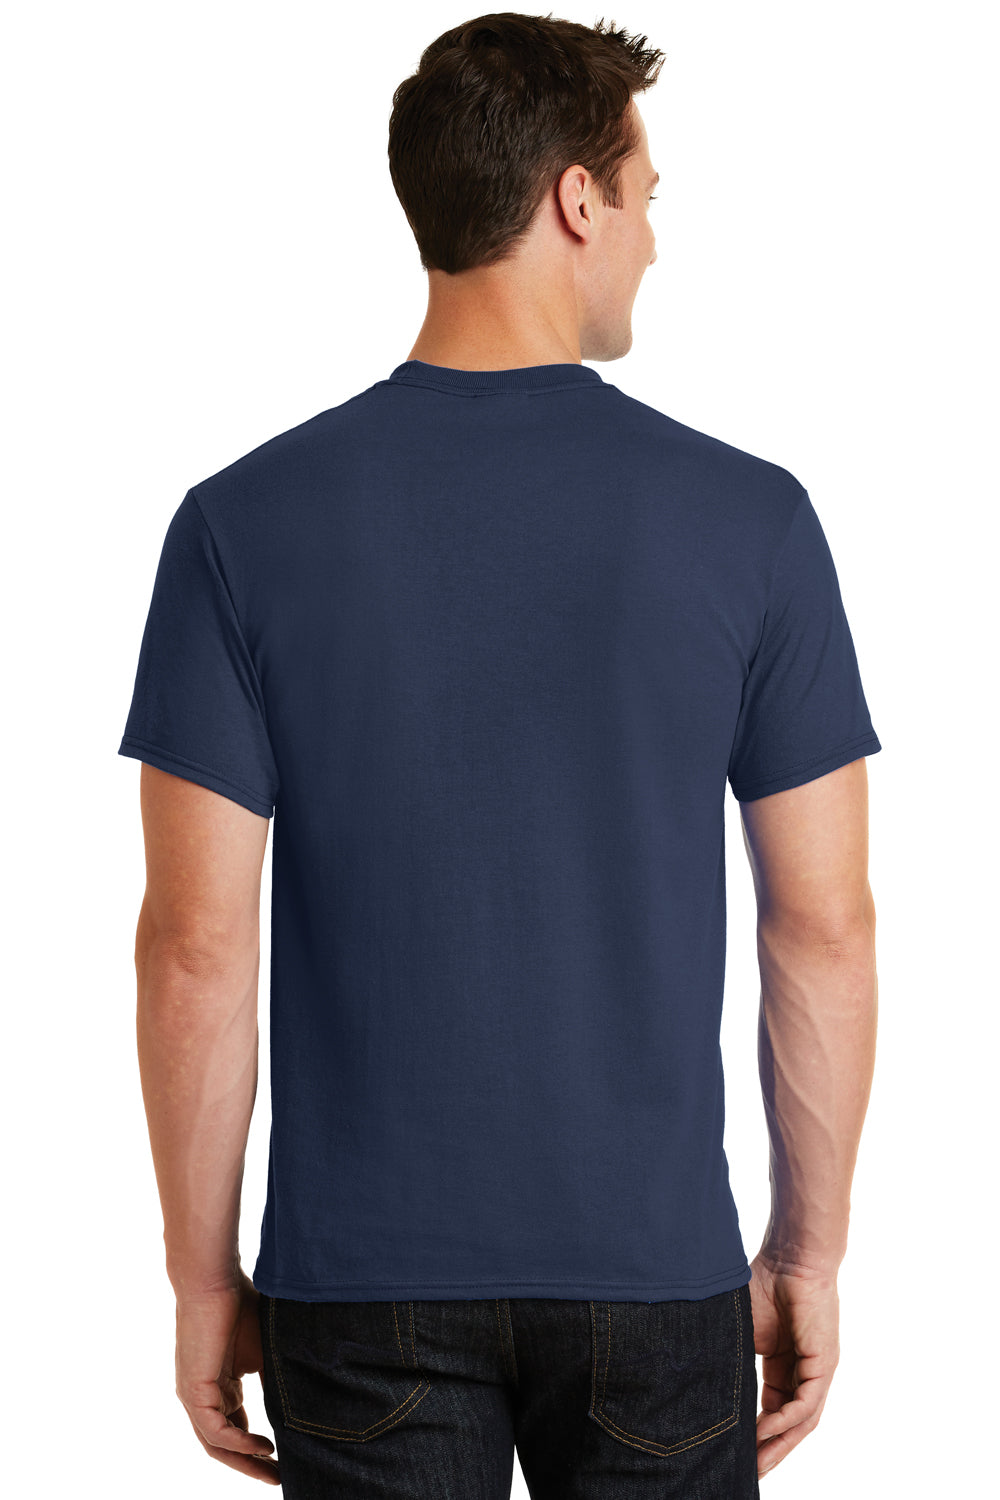 Port & Company PC55 Mens Core Short Sleeve Crewneck T-Shirt Navy Blue Back